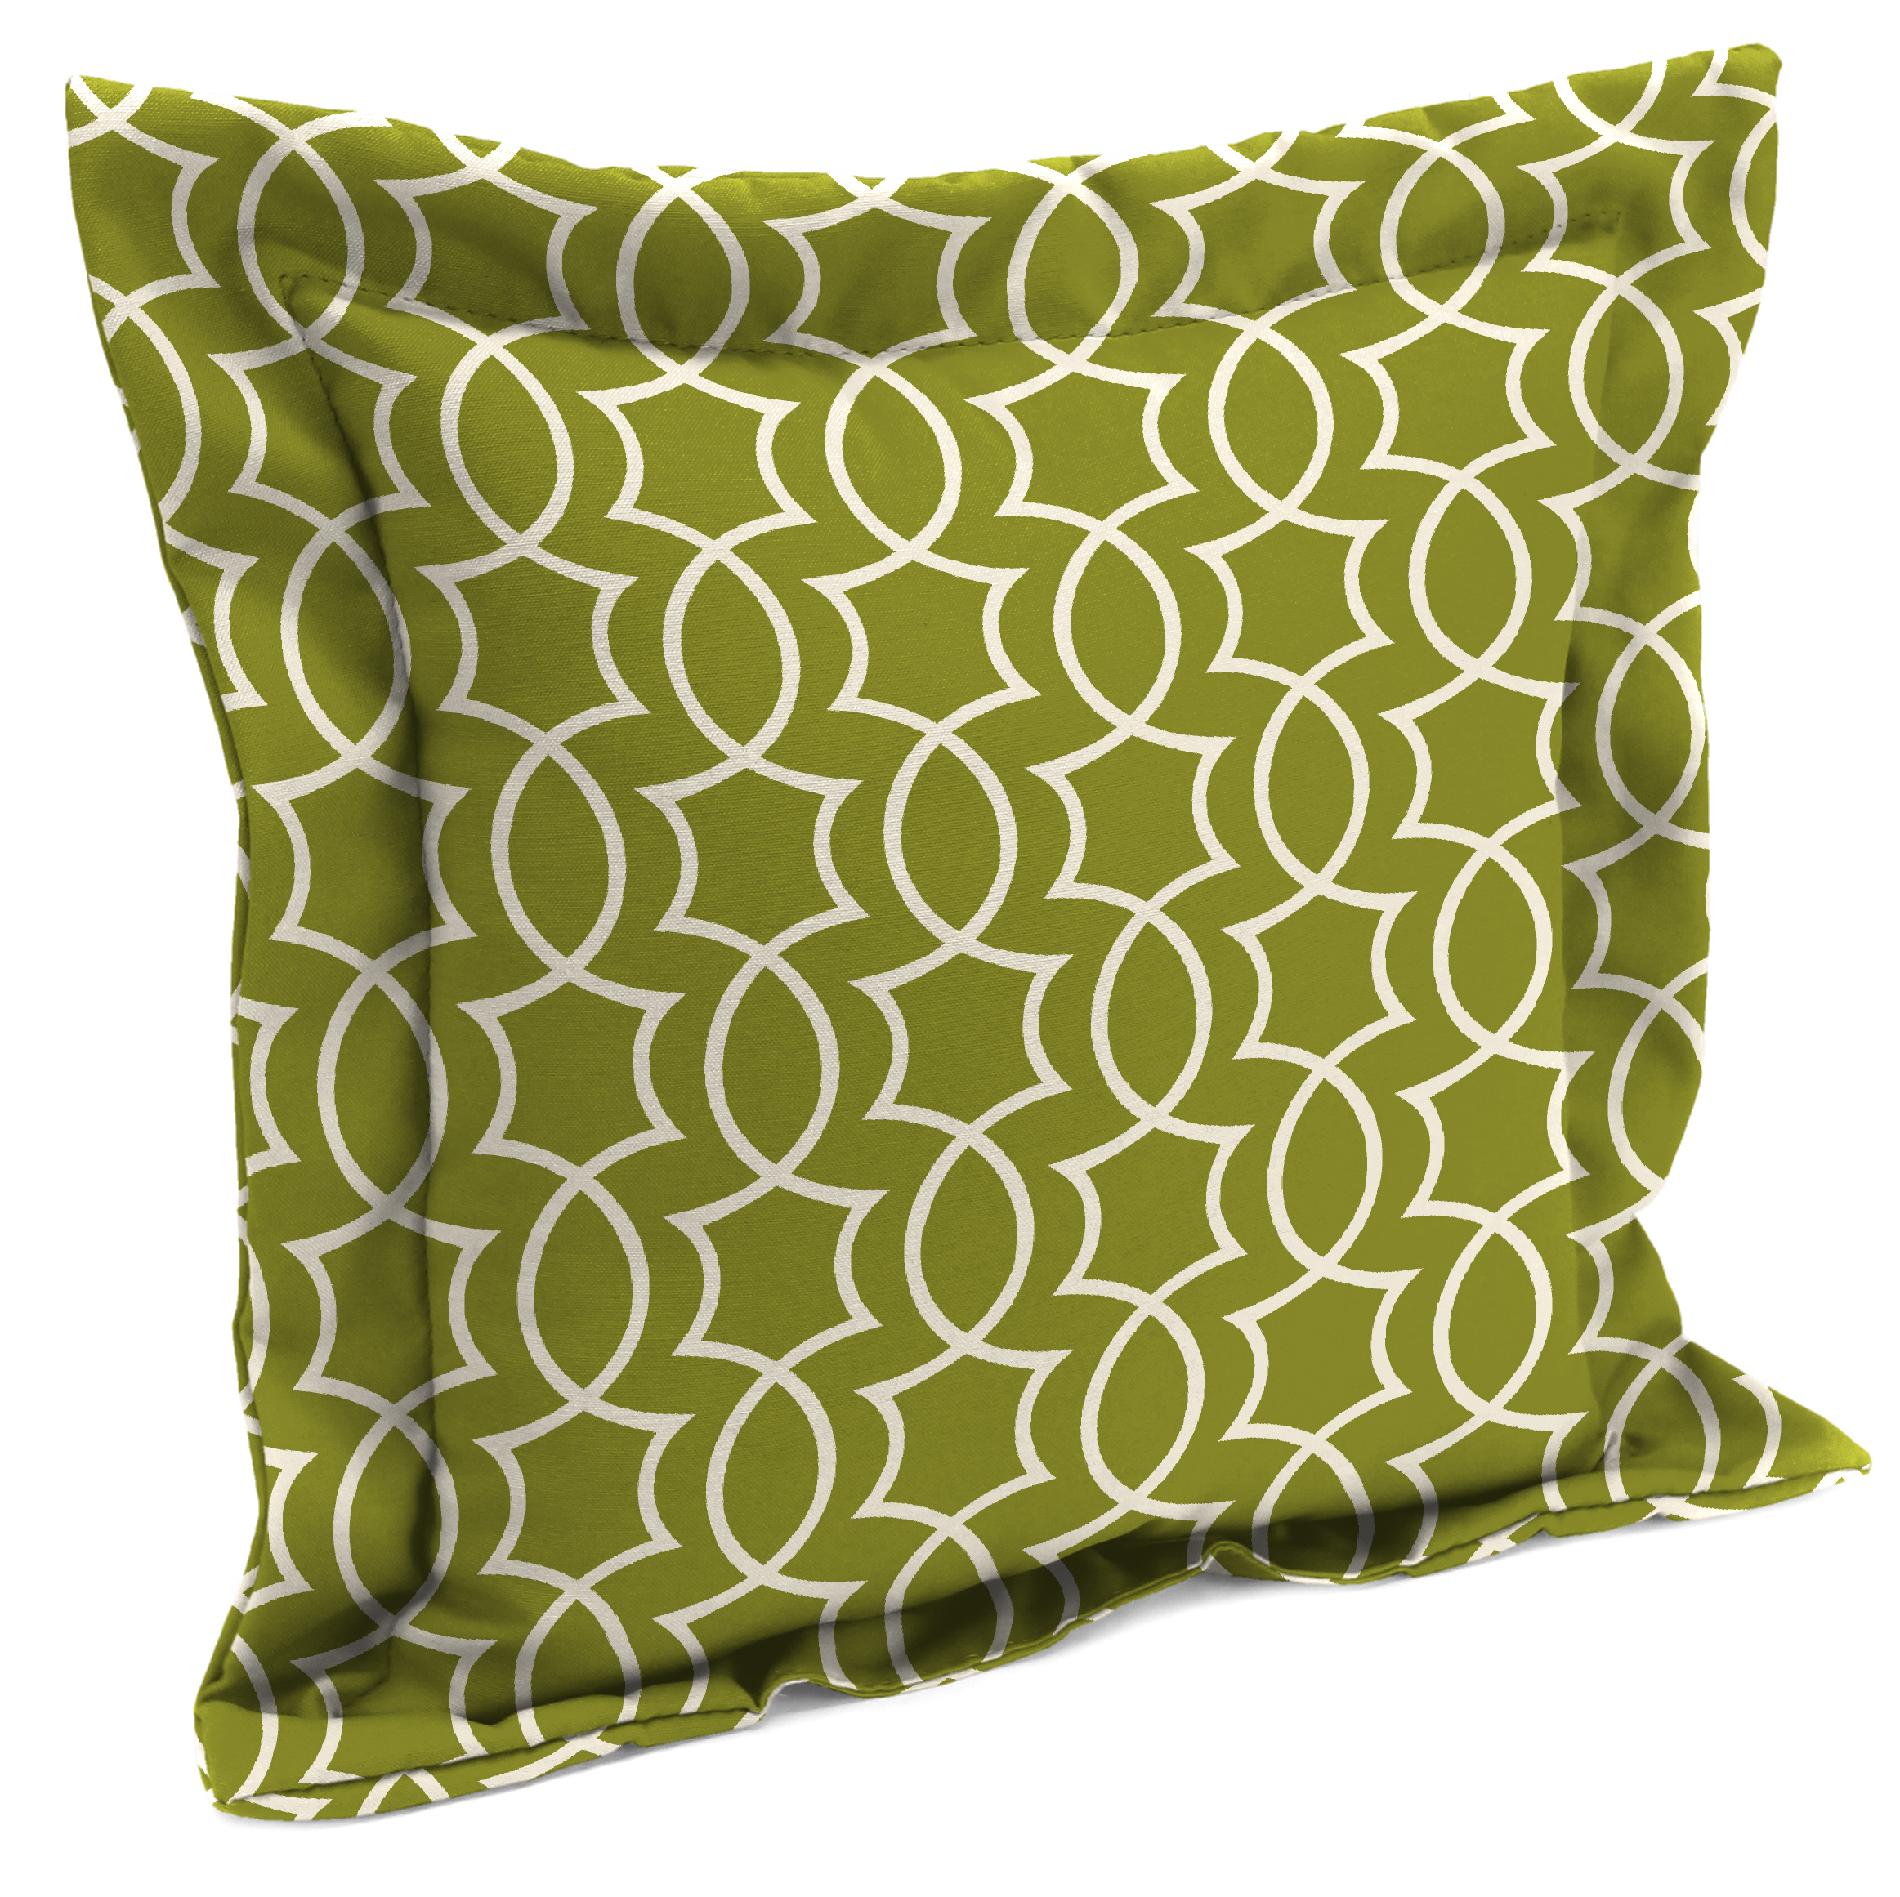 18" Flange Toss Pillow Cushion in Titan Kiwi